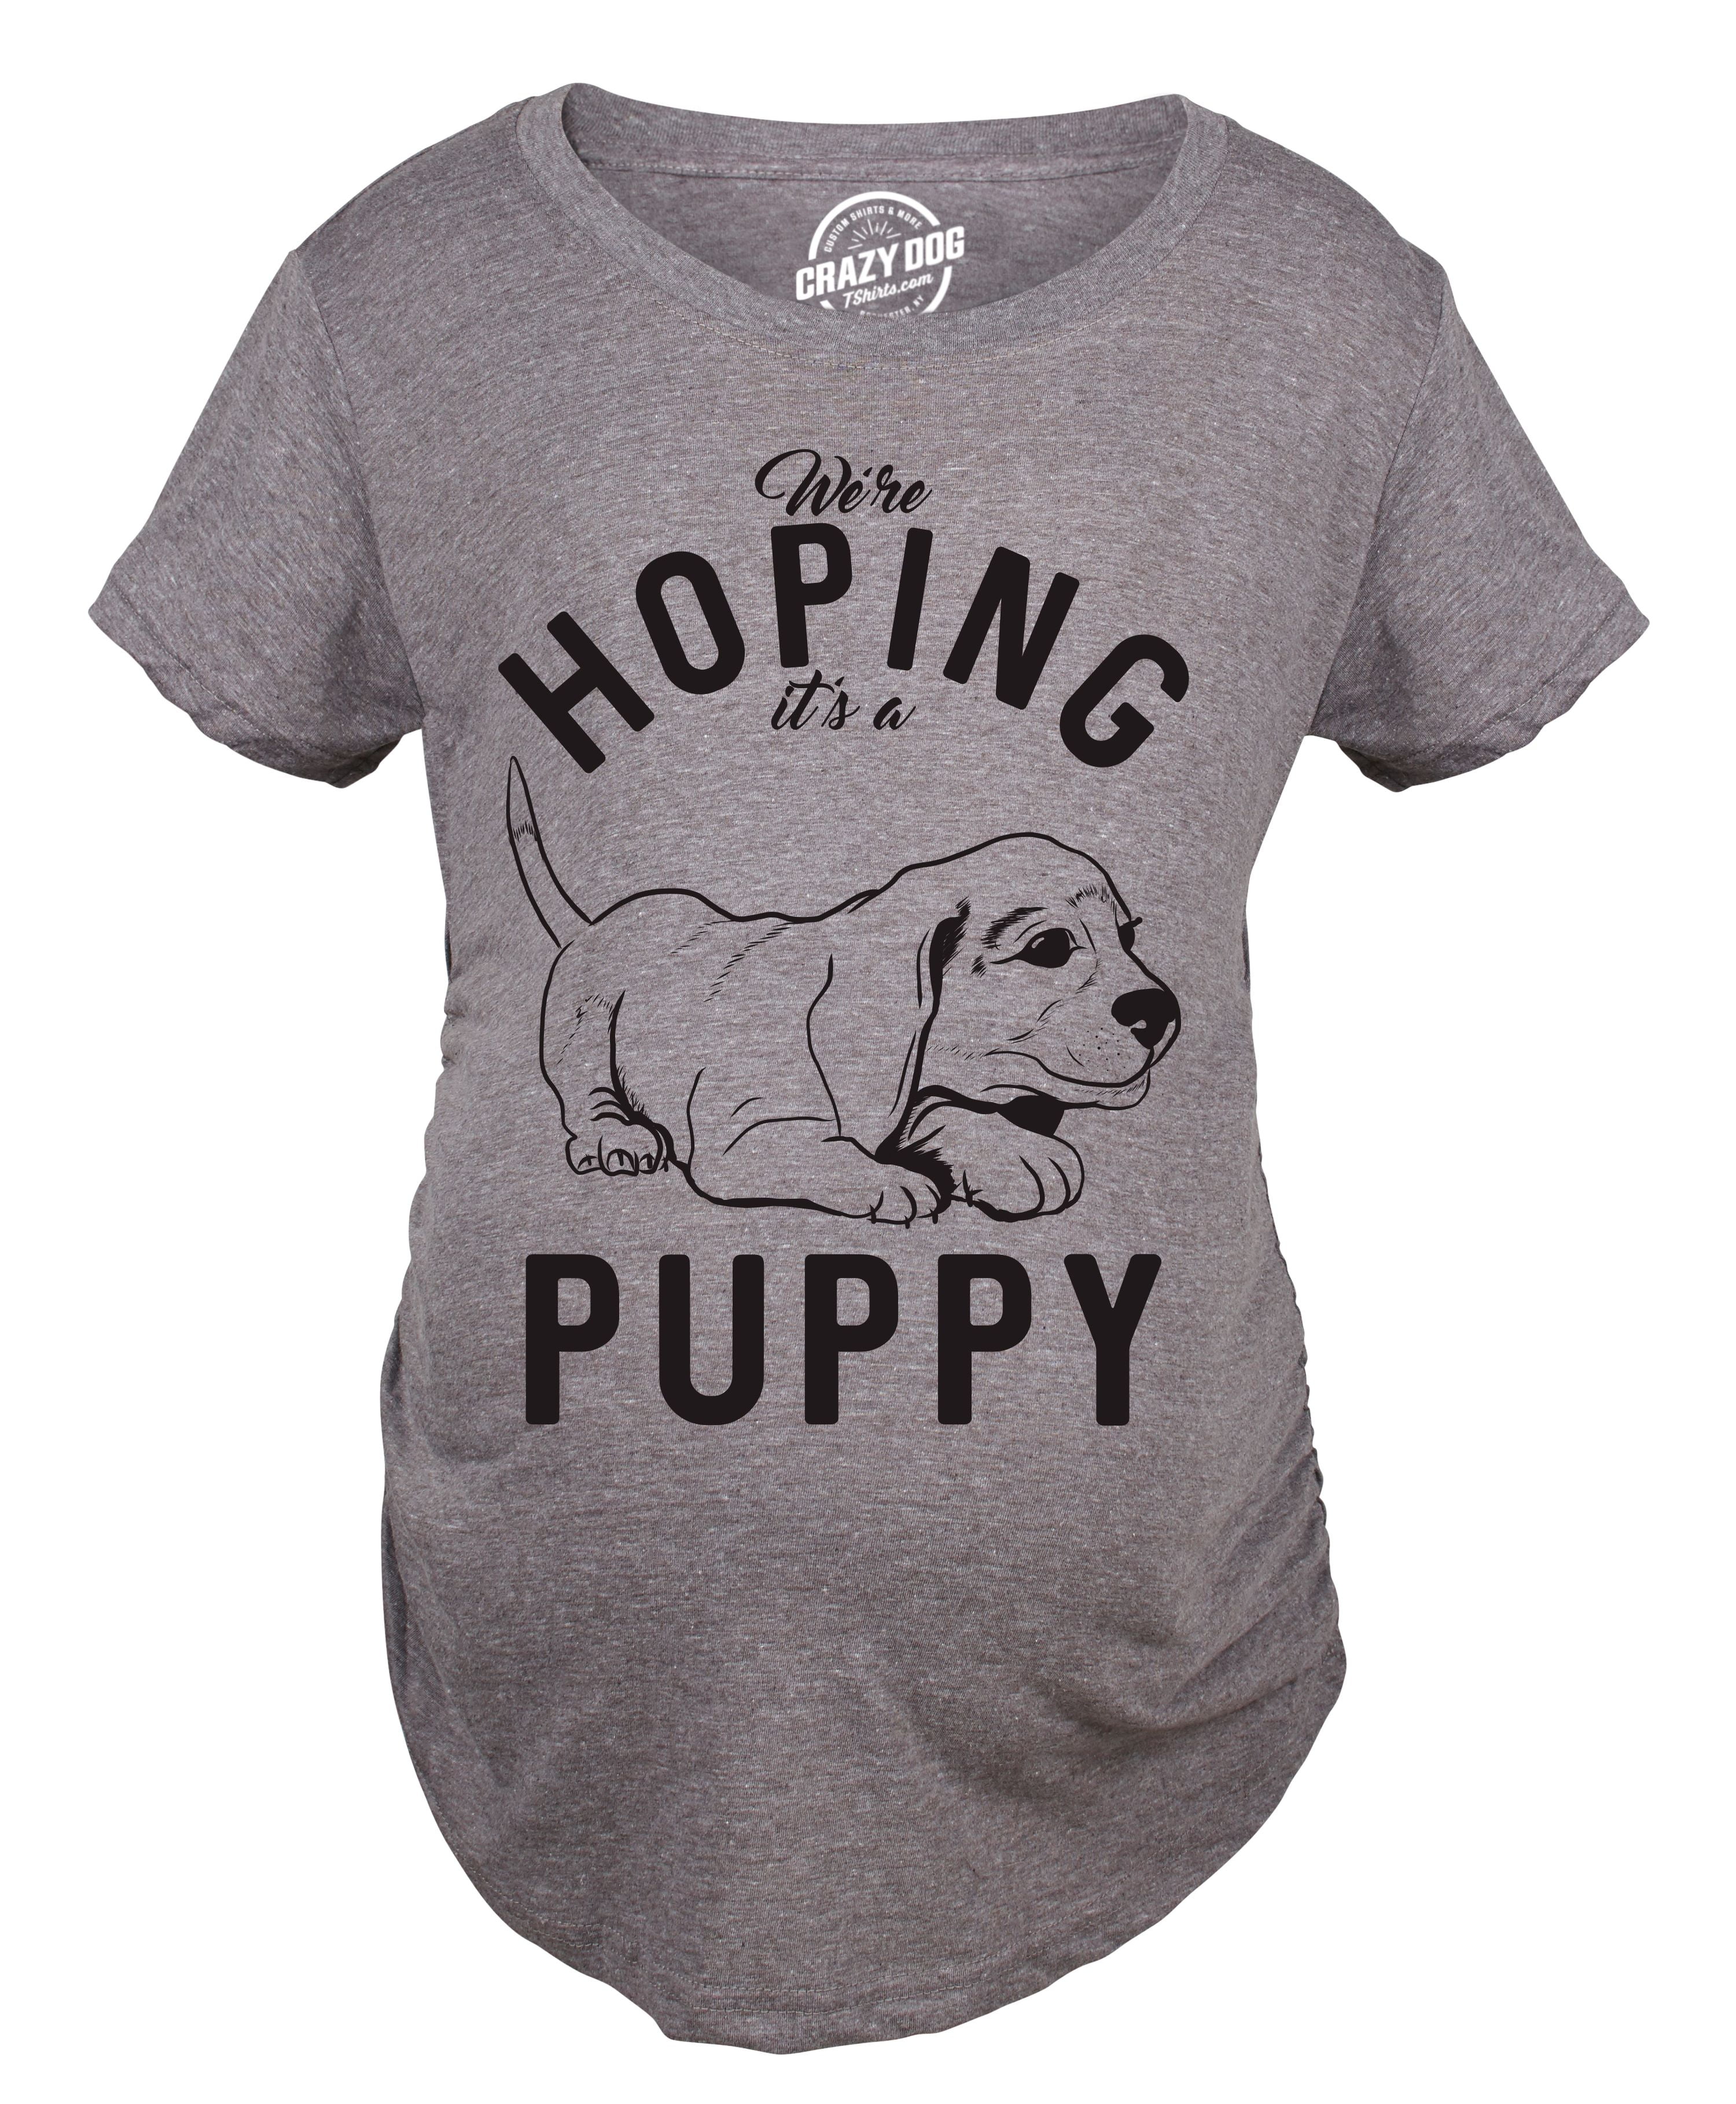 Crazy Dog Tshirts Maternity Hoping Its A Puppy T Shirt Funny Sarcastic Pregnancy Announcement tee Camiseta De Maternidad